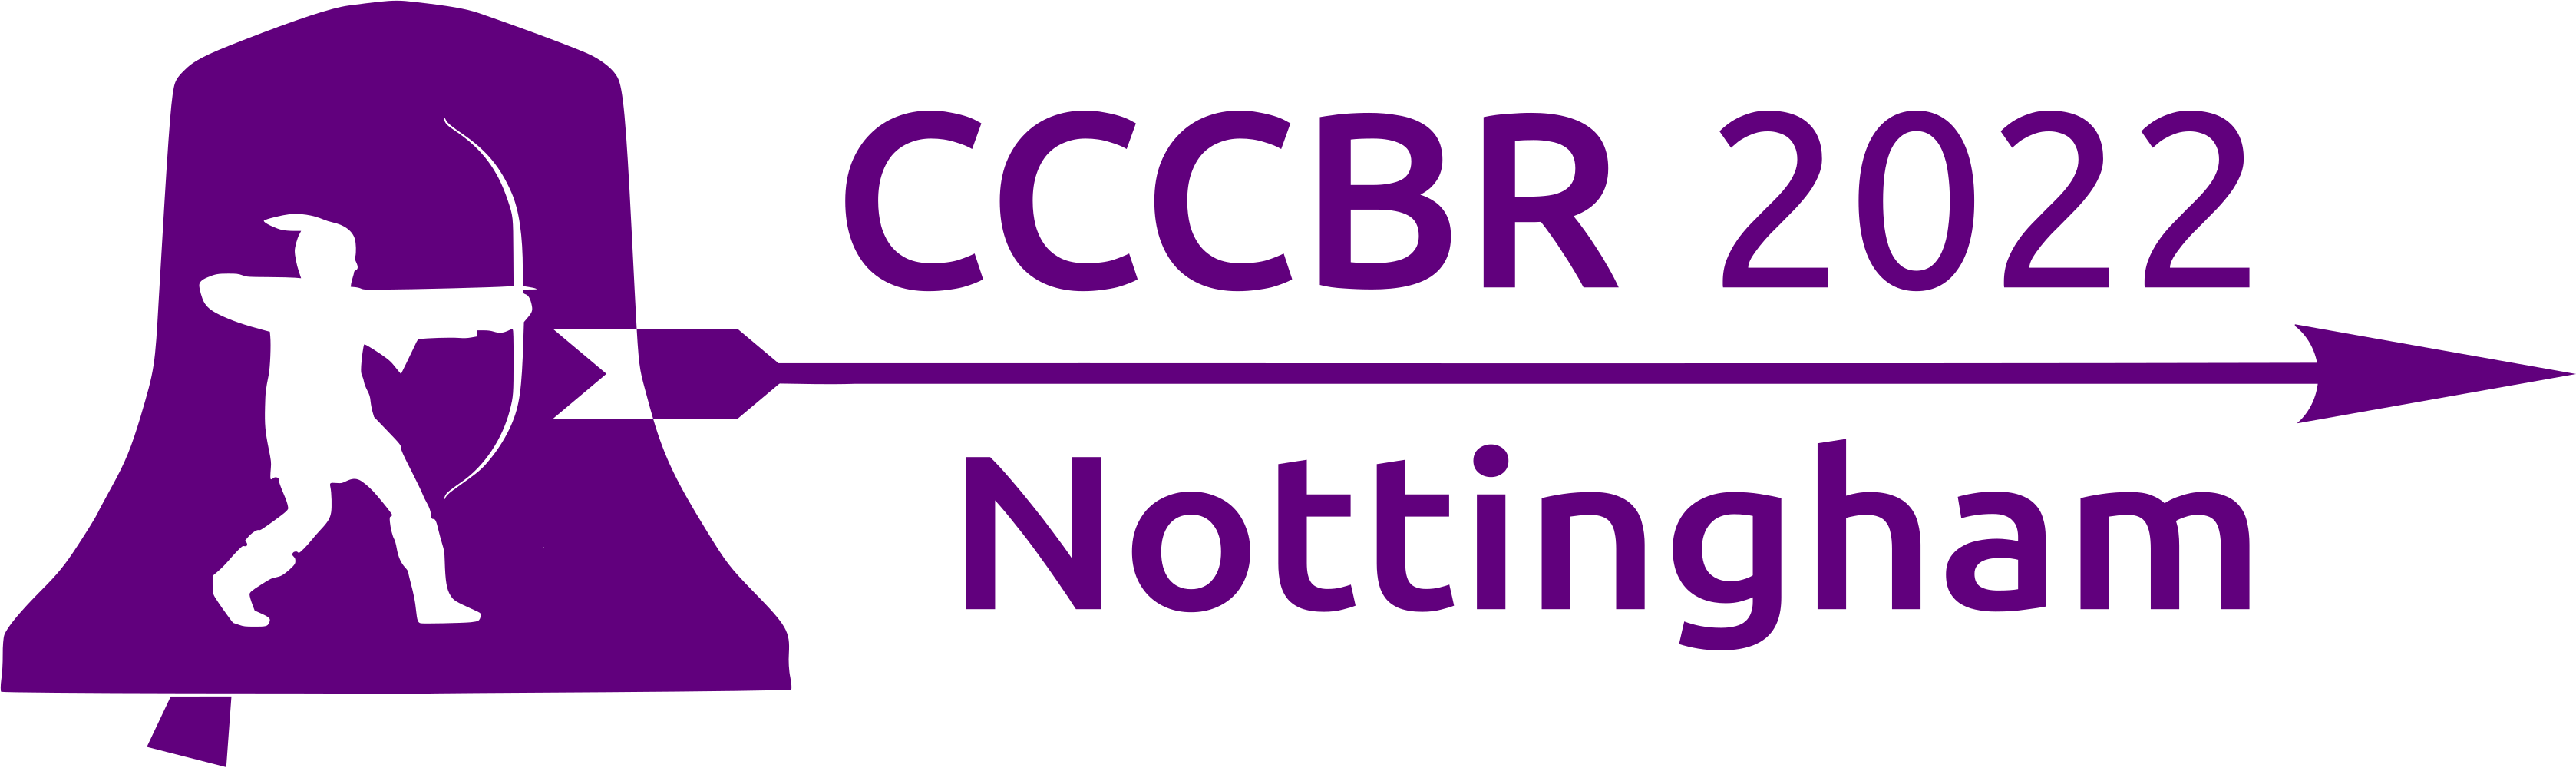 CCCBR_2022_Nottingham_Logo_JPurp_lores